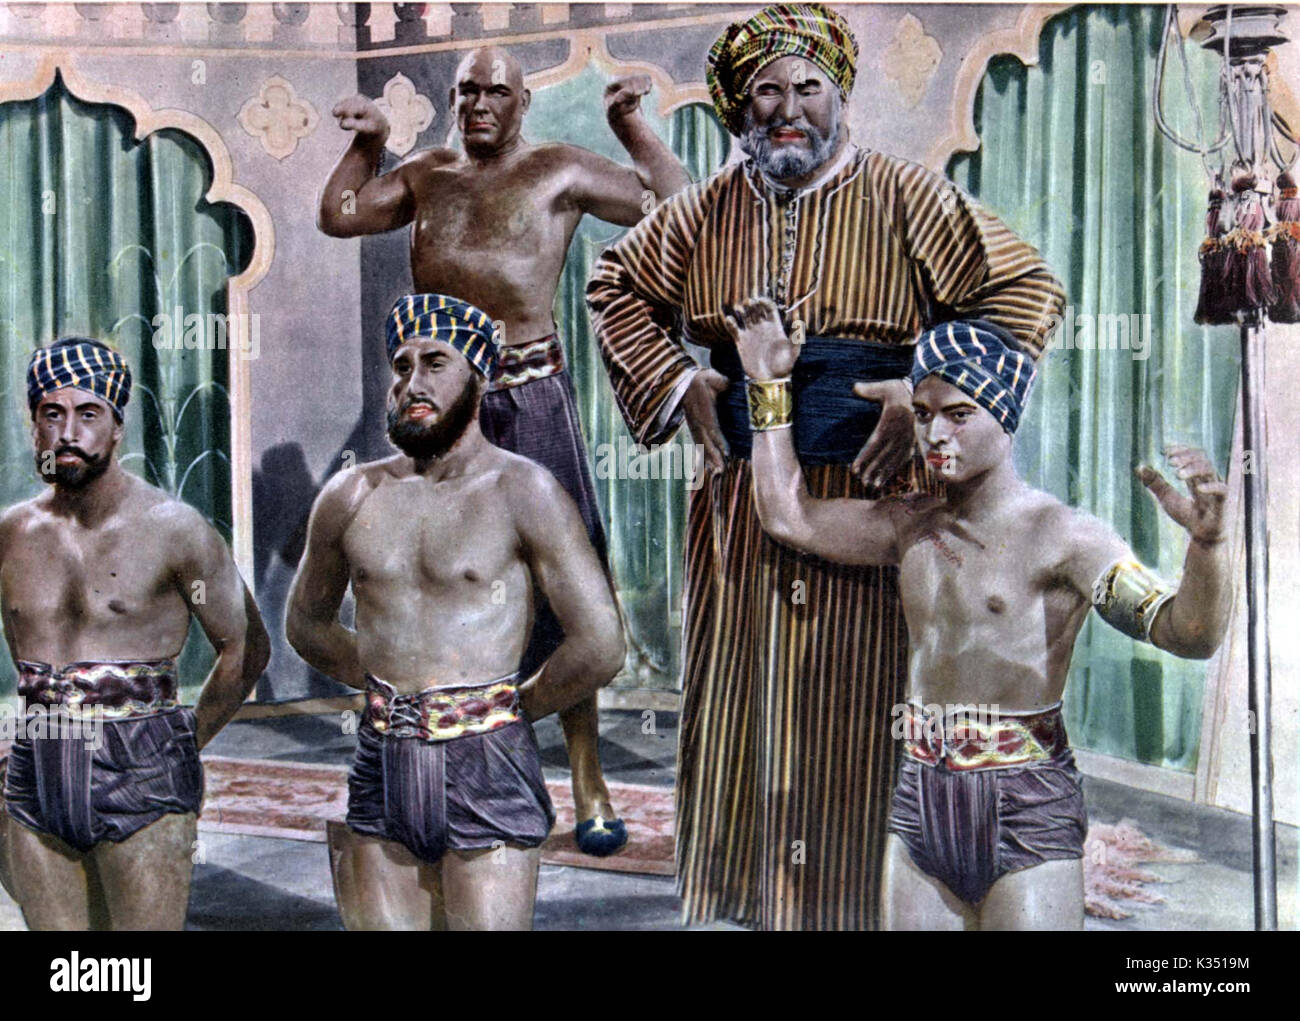 ARABIAN NIGHTS SABU rechts unten Datum: 1942 Stockfoto